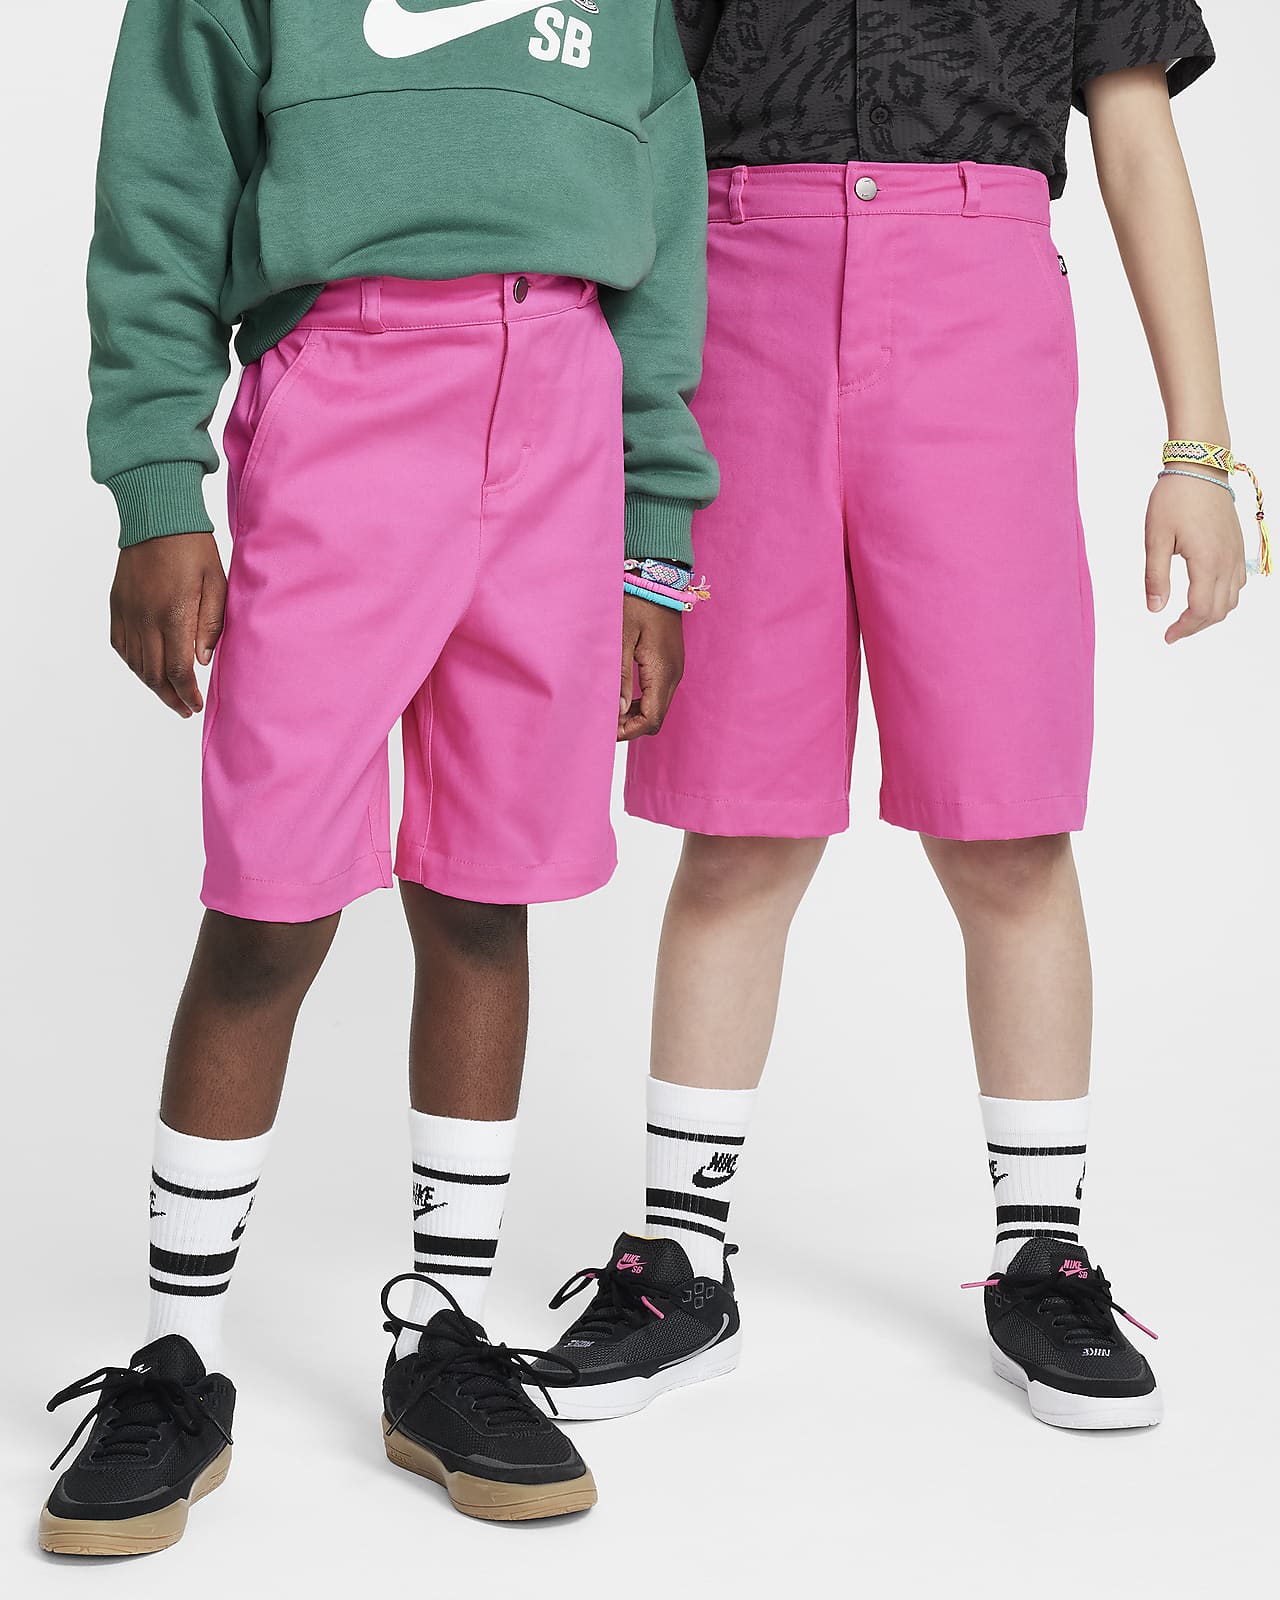 Nike SB Big Kids' Chino Skate Shorts